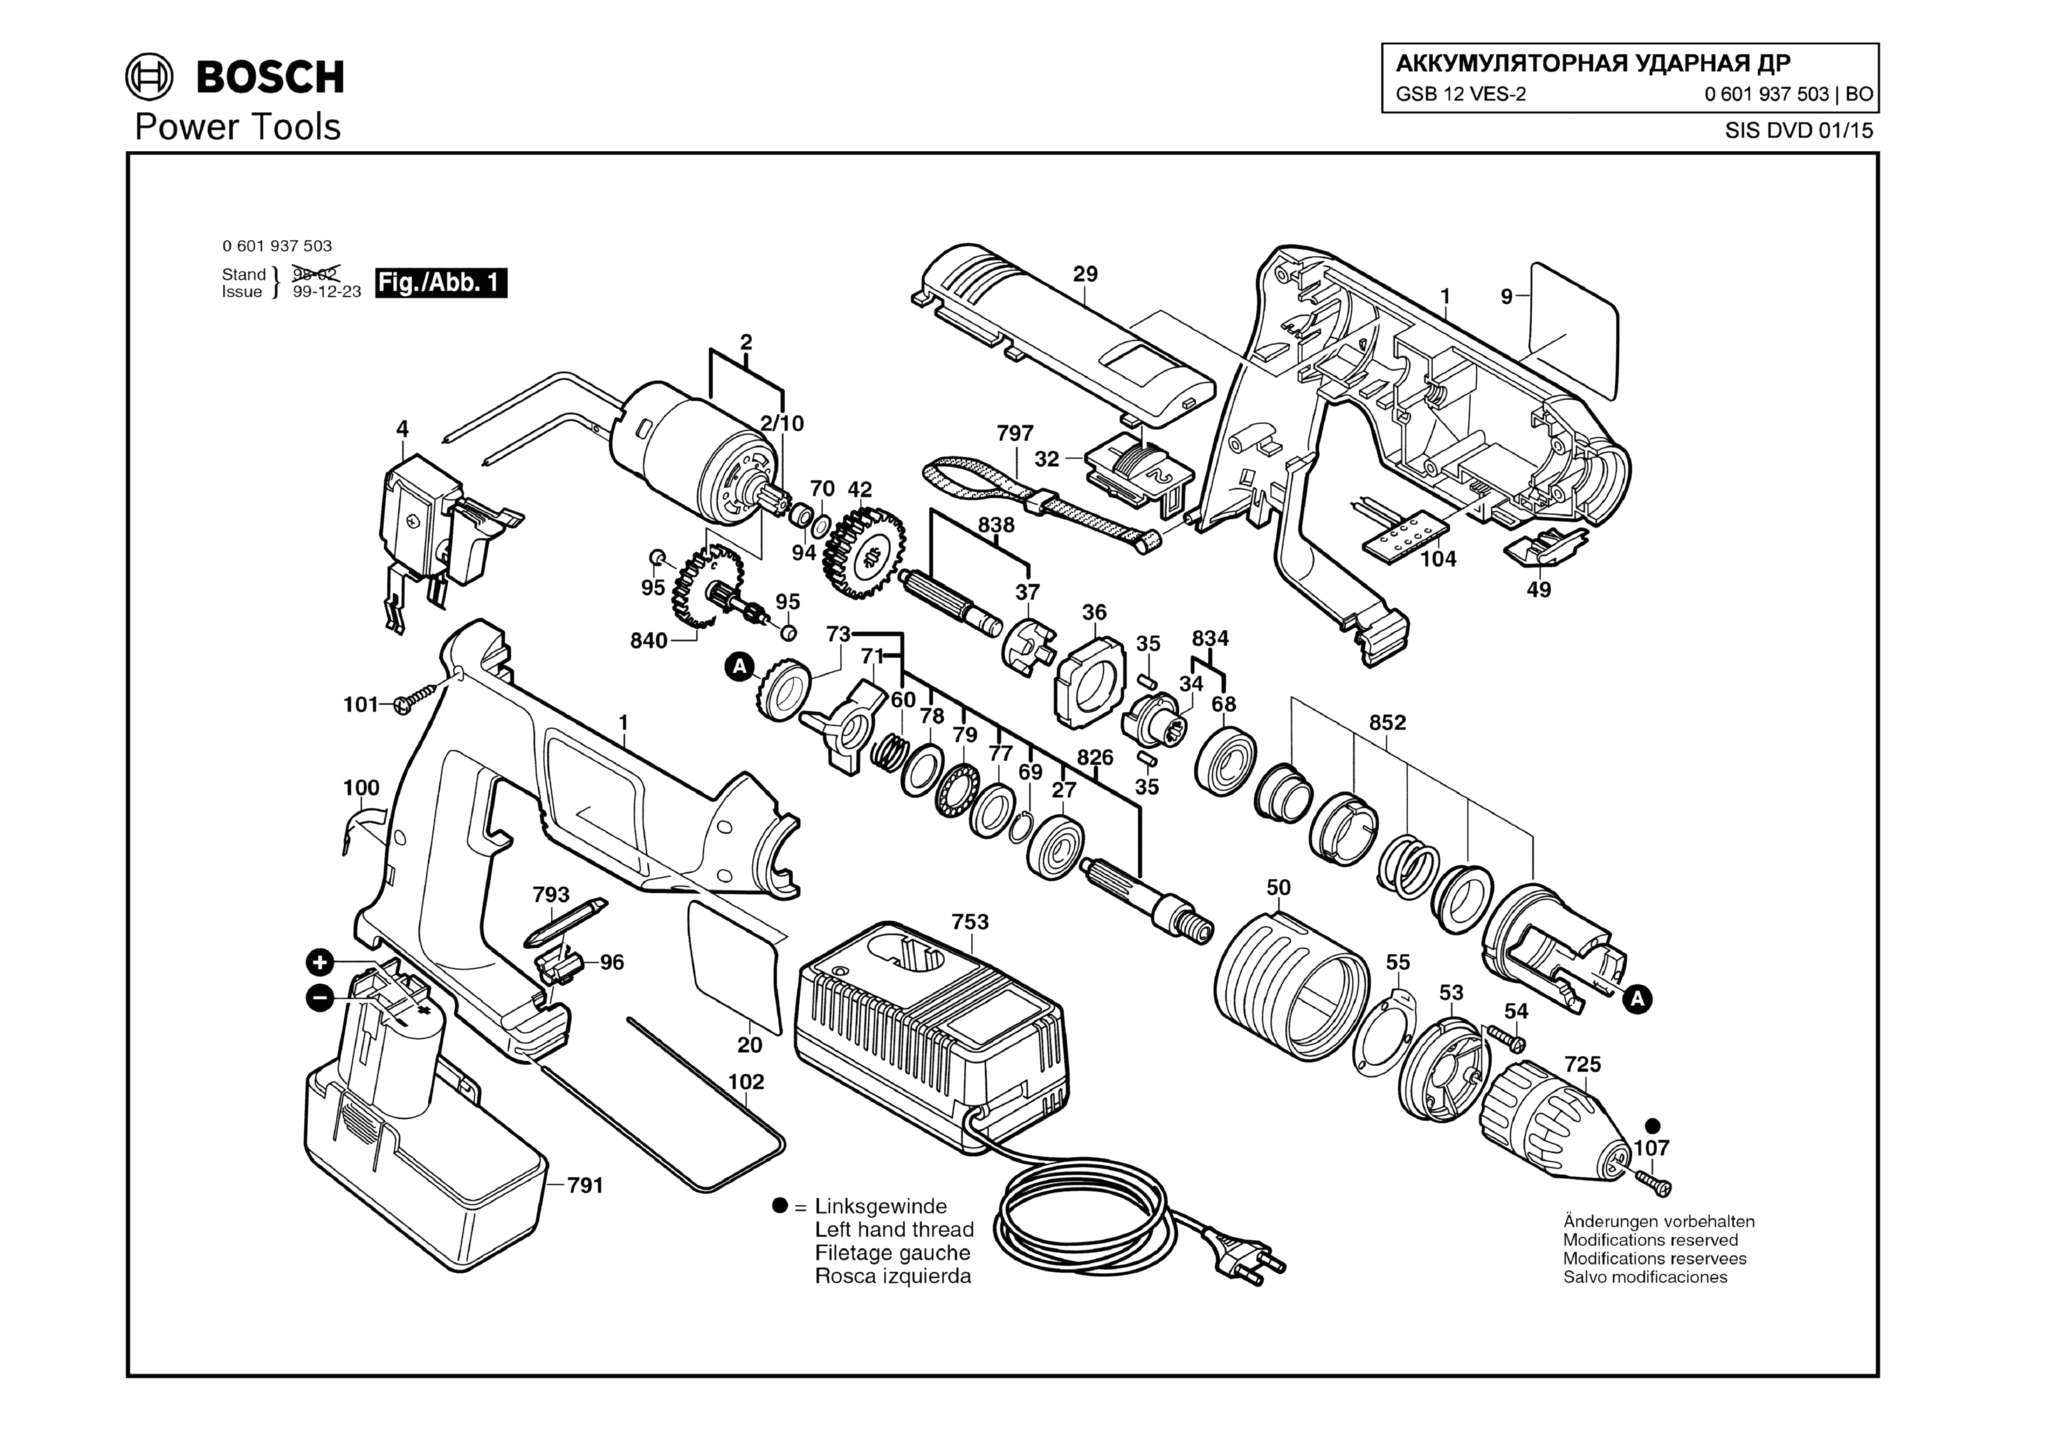 Запчасти, схема и деталировка Bosch GSB 12 VES-2 (ТИП 0601937503)